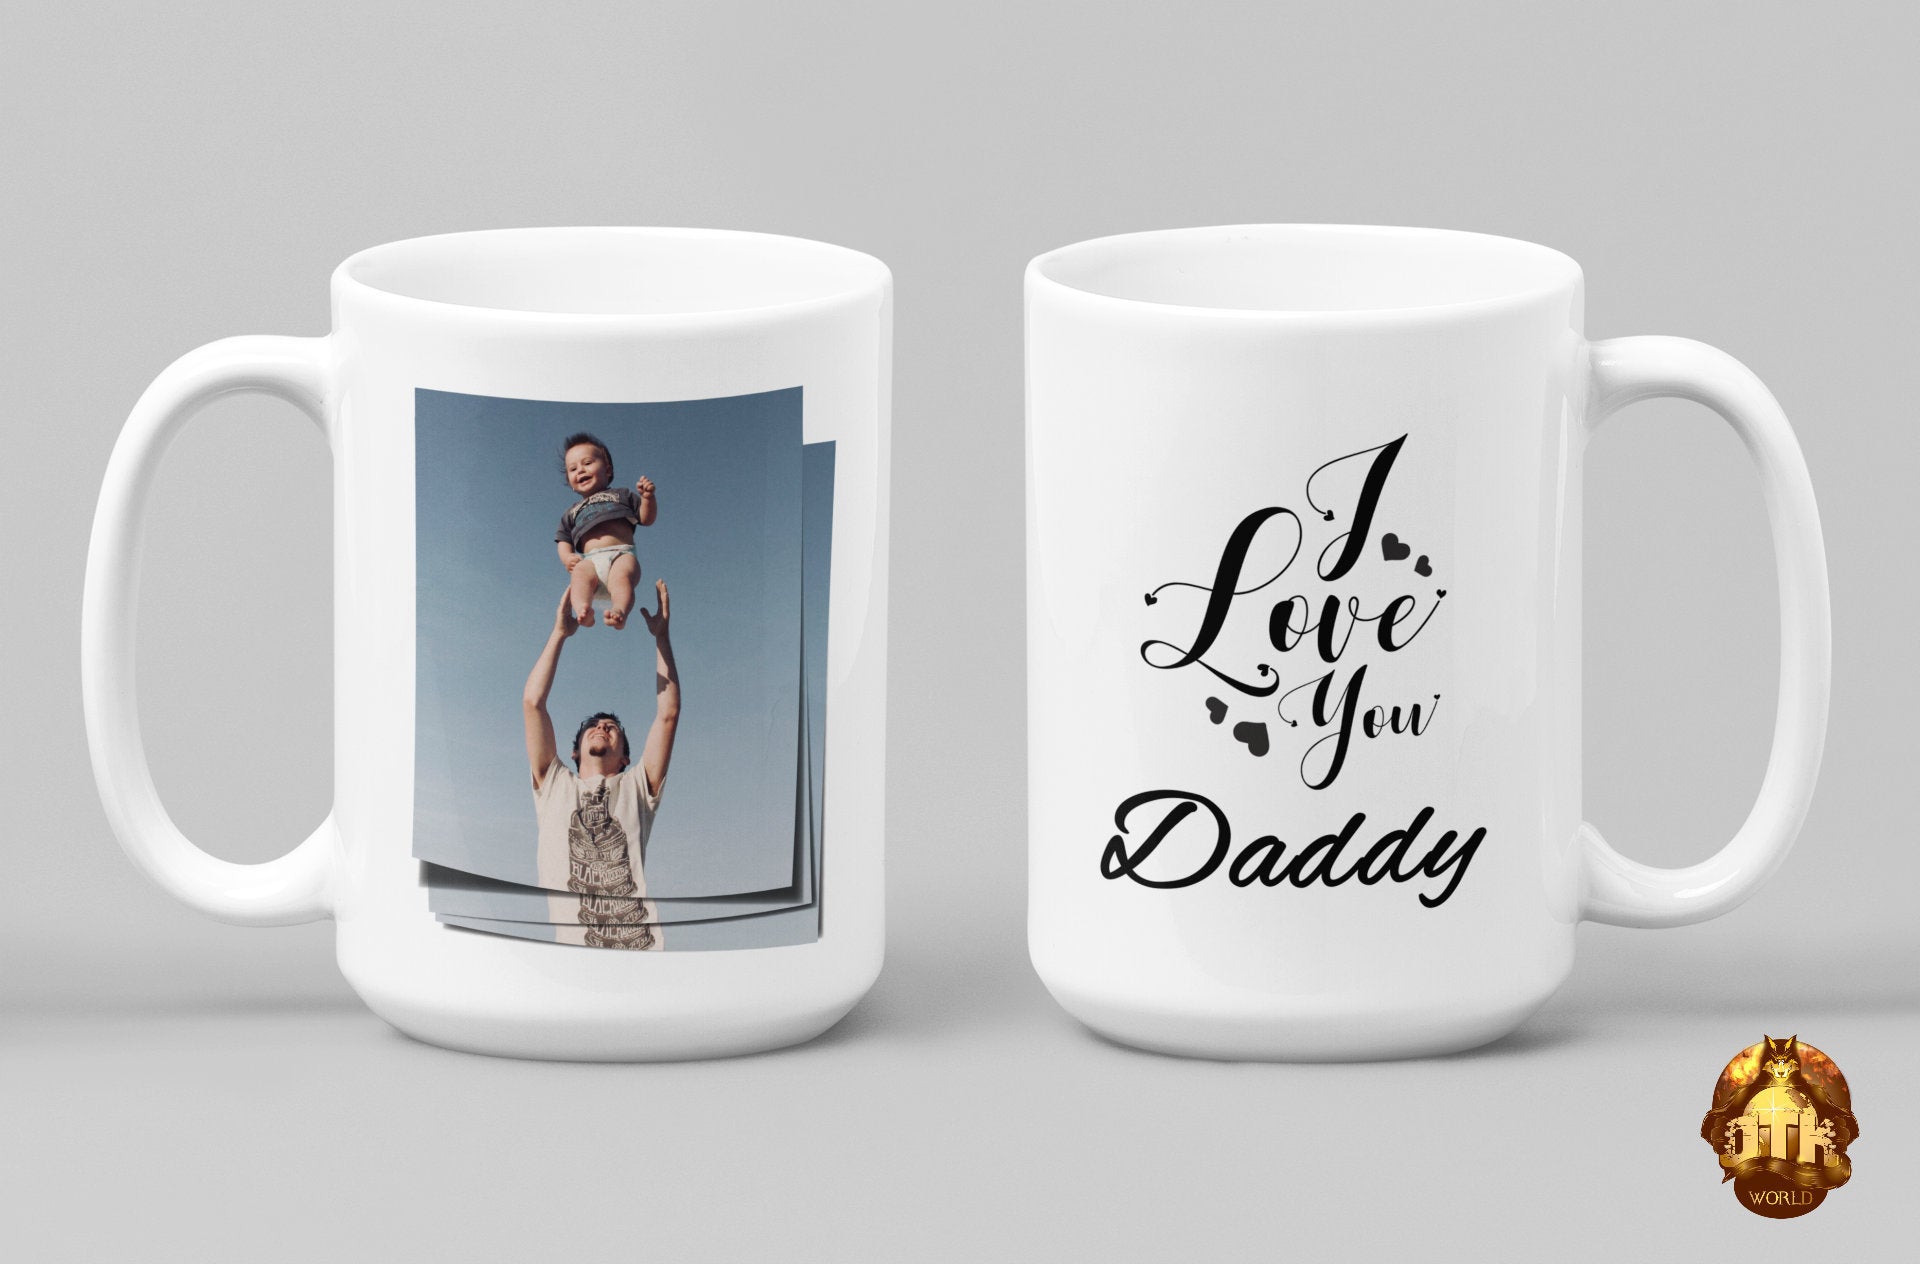 I Love You Daddy Coffee Mug